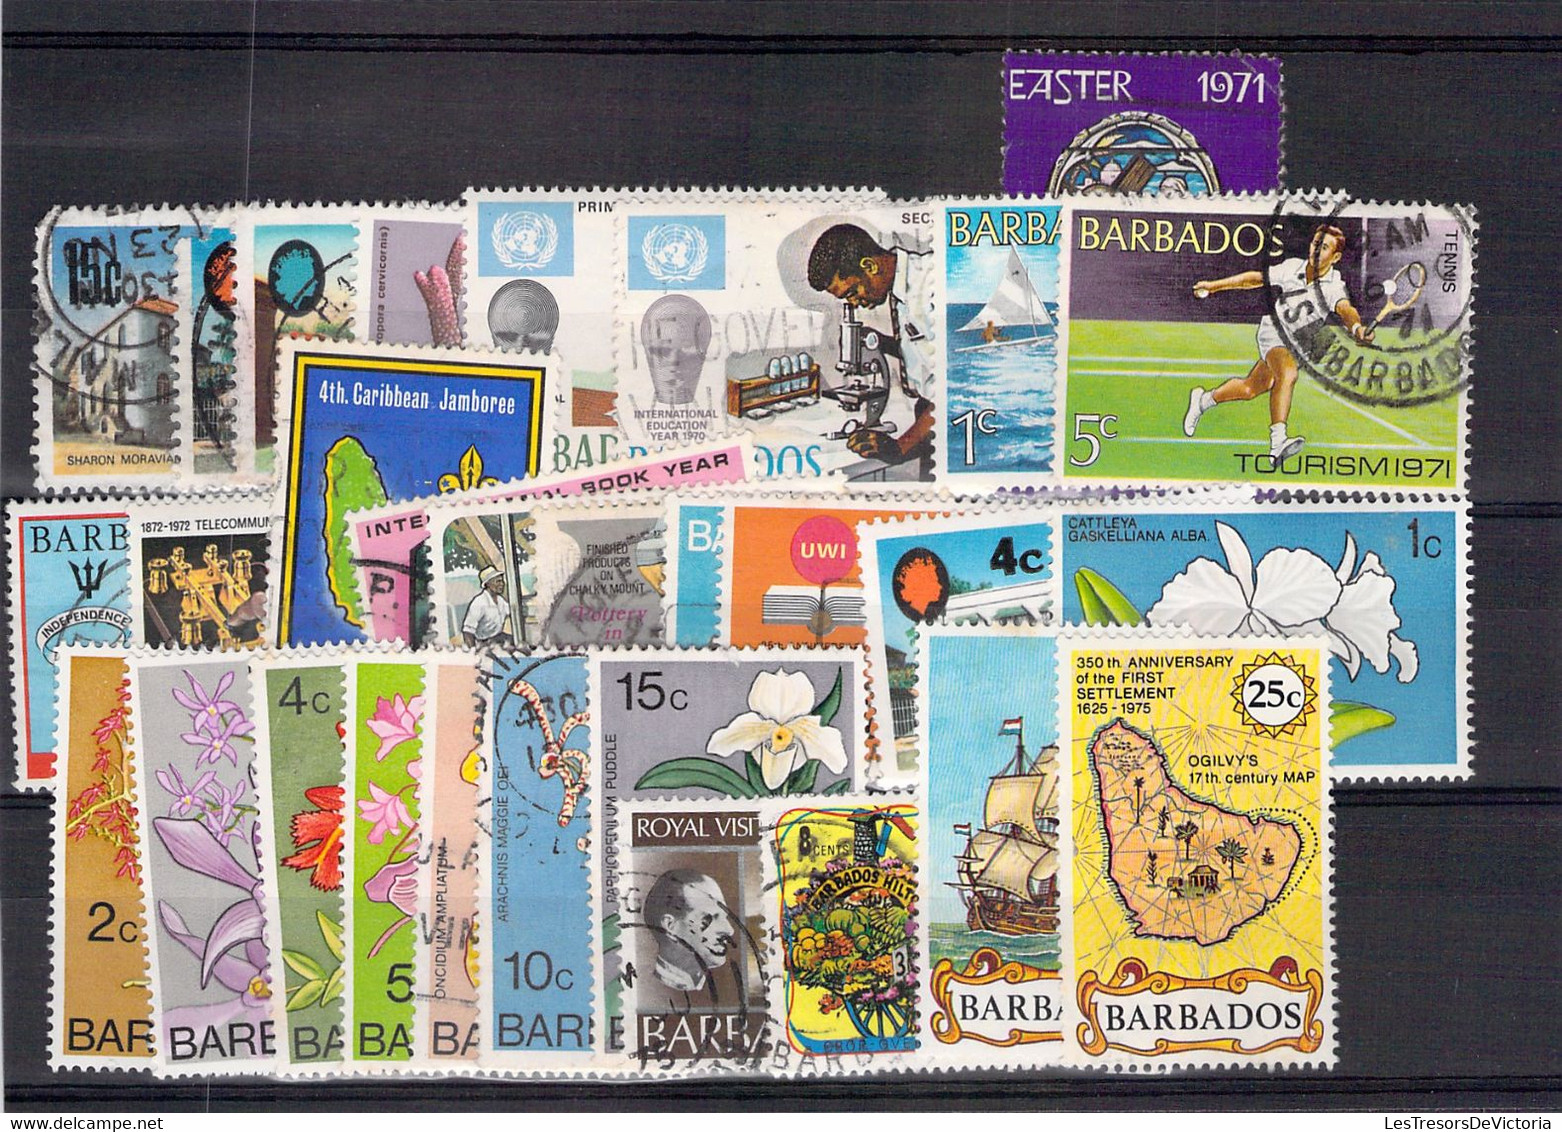 Lot de timbres Barbades Barbados - PRIX DE DEPART A 10 EUROS !